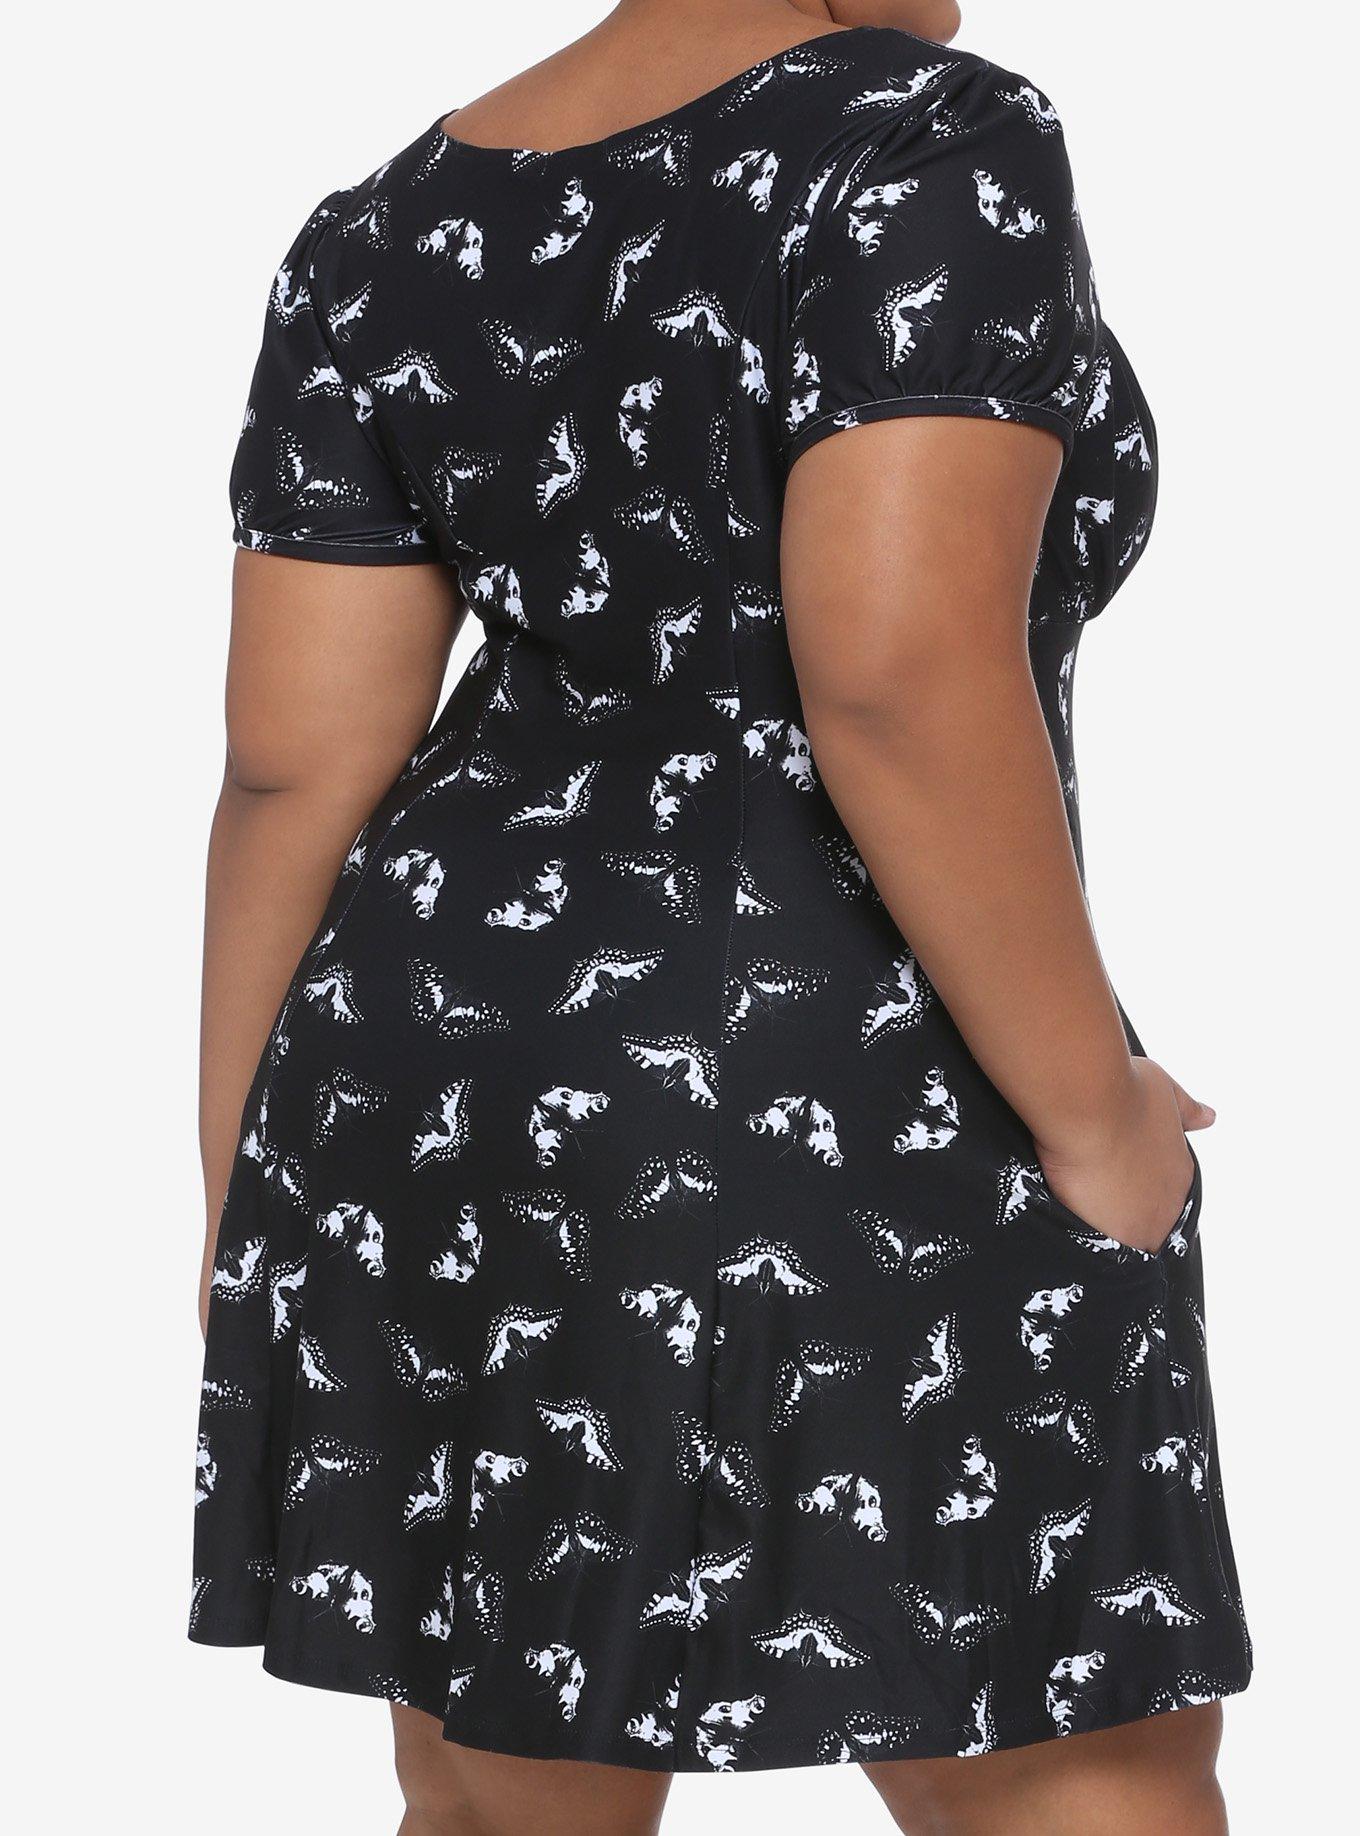 Butterfly Lace-Up Dress Plus Size, BLACK  WHITE, alternate